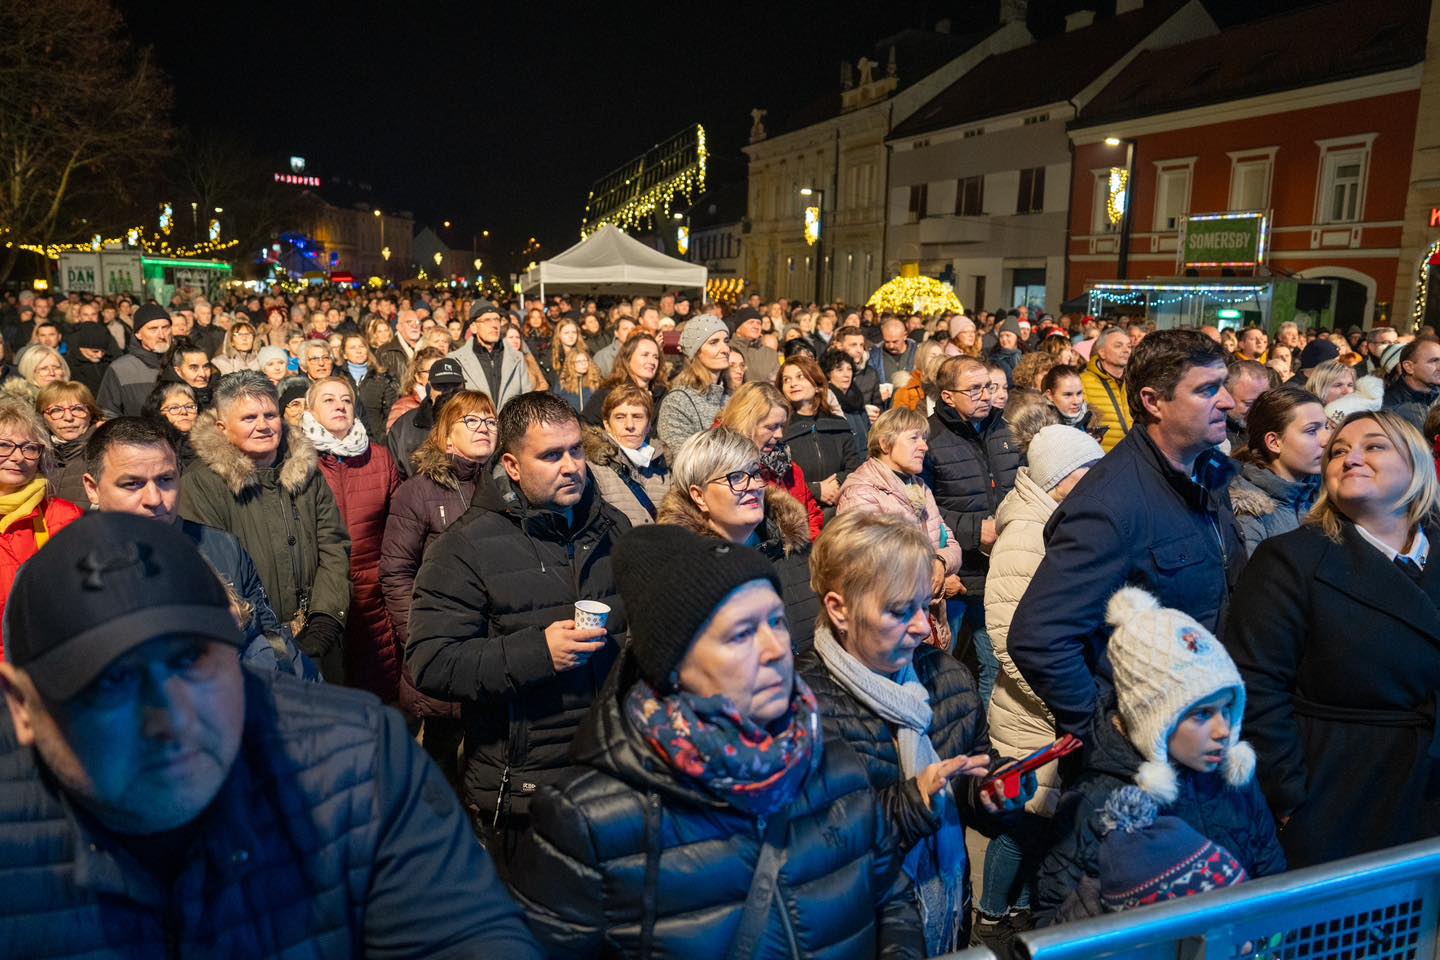 Koncert klape Rišpet u Koprivnici - publika